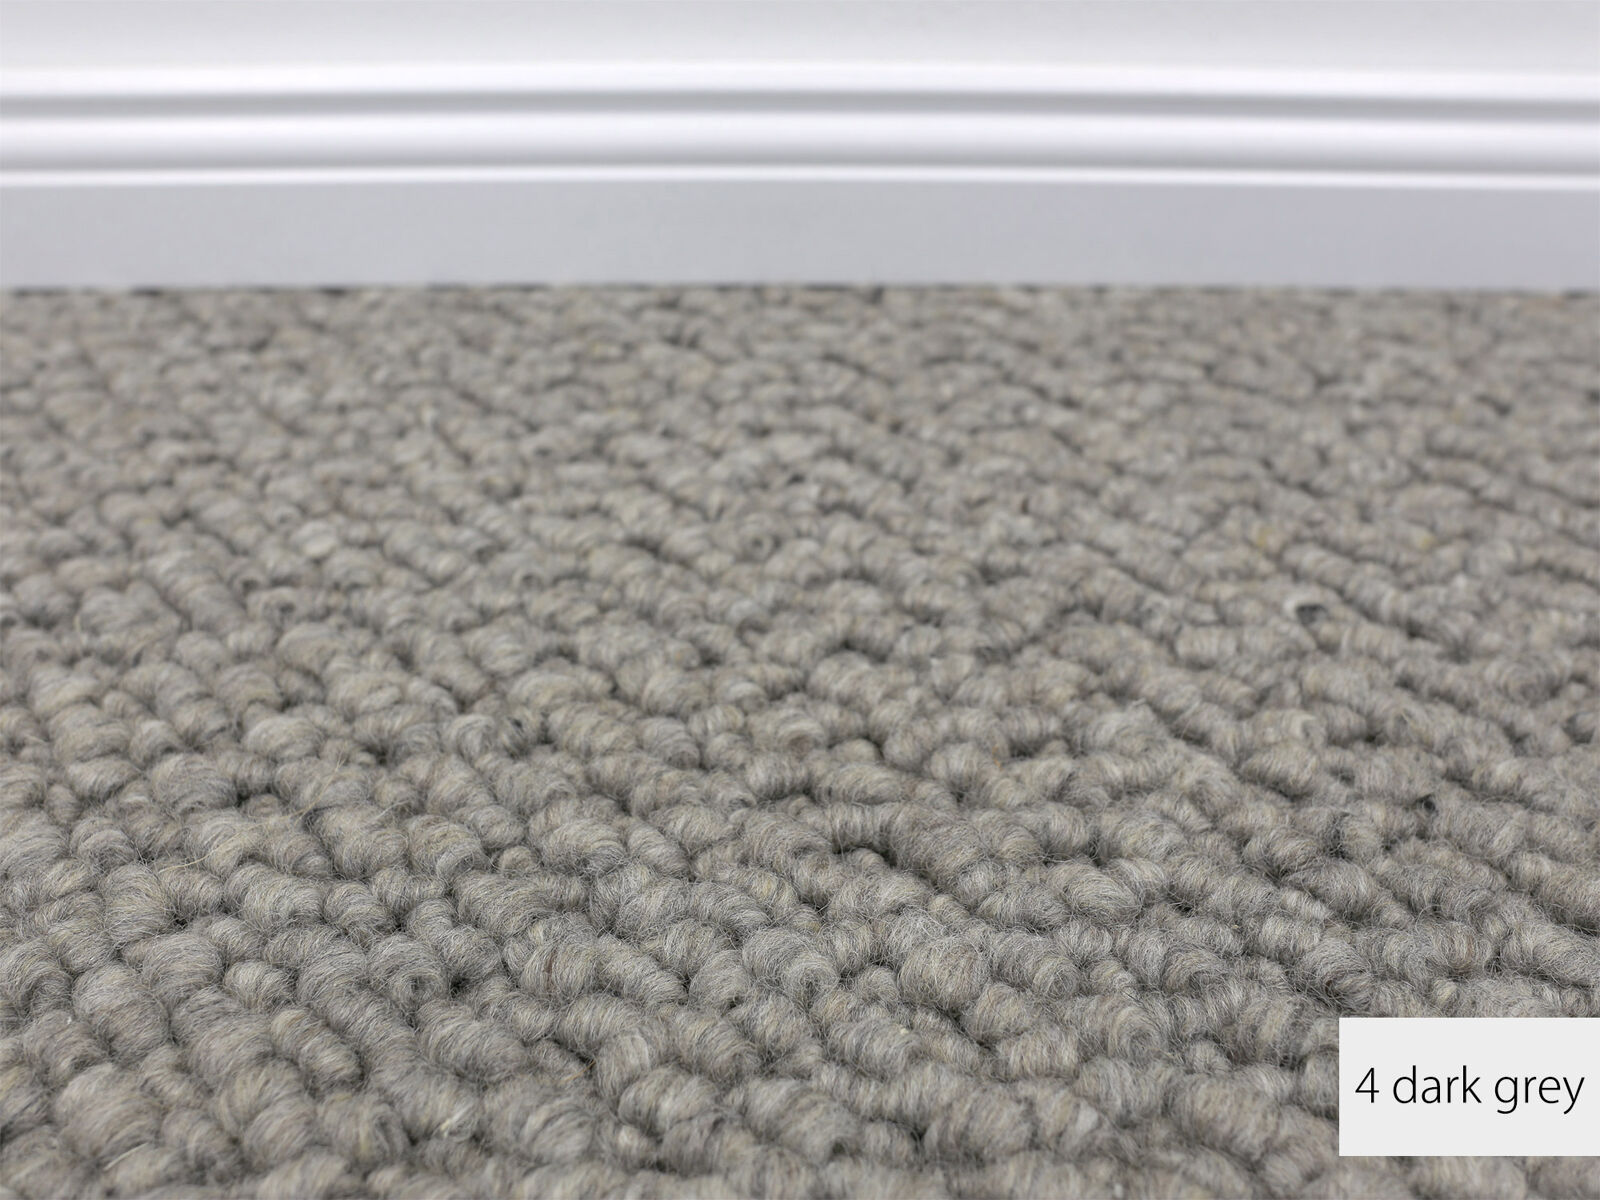 Titan Berber Teppichboden, 100% Wolle, 400 & 500cm Breite, 4 dark grey, Mustermaterial